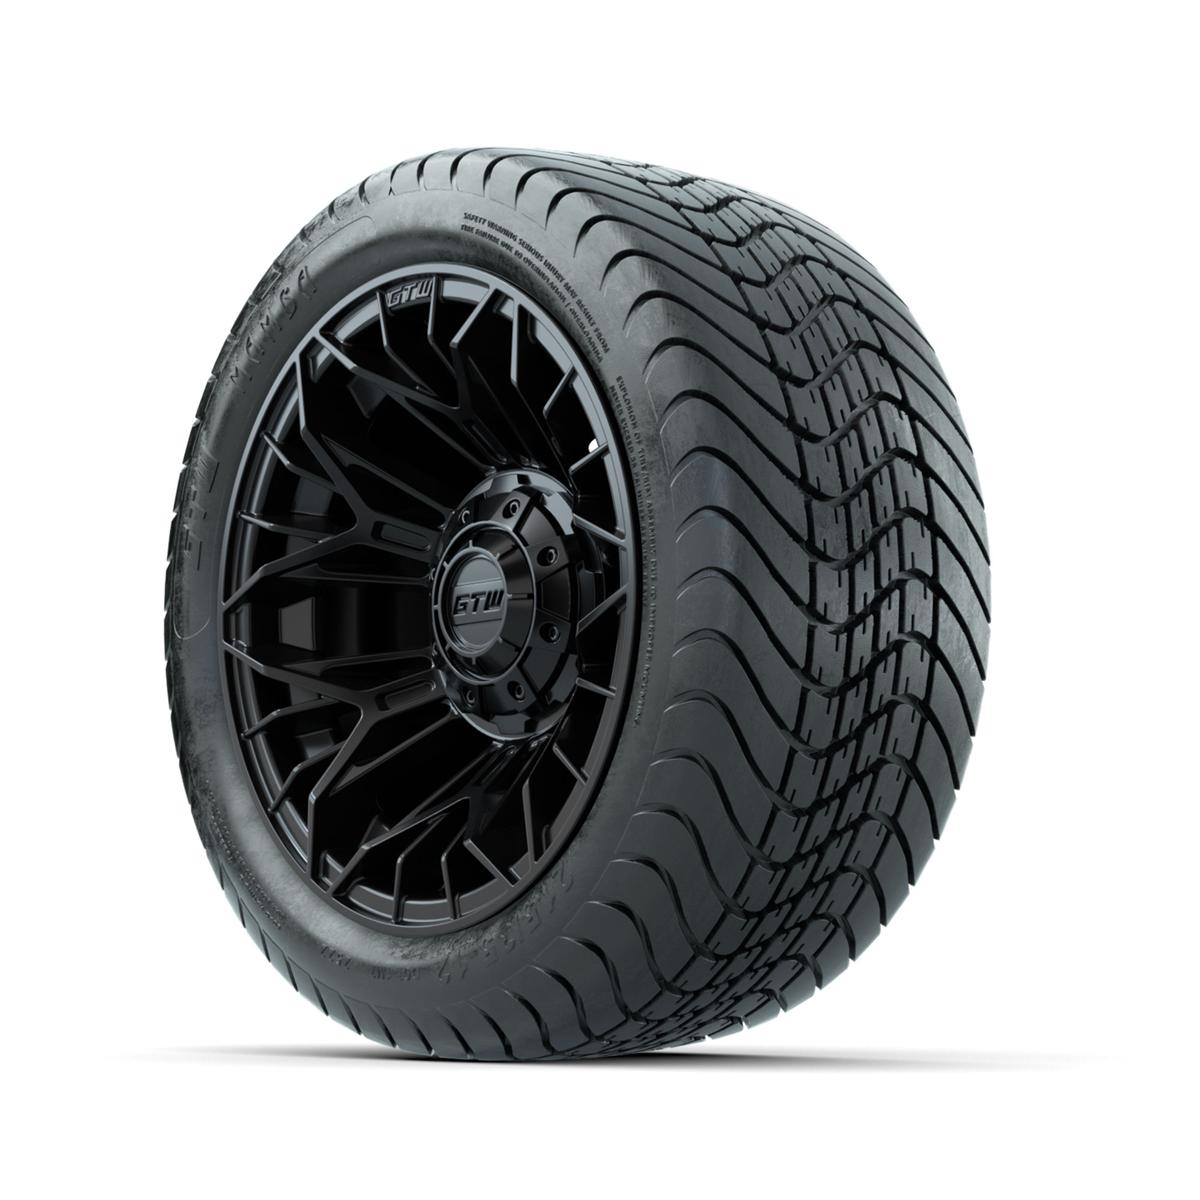 Set of (4) 12 in GTW® Stellar Black Wheels with 215/35-12 Mamba Street Tires